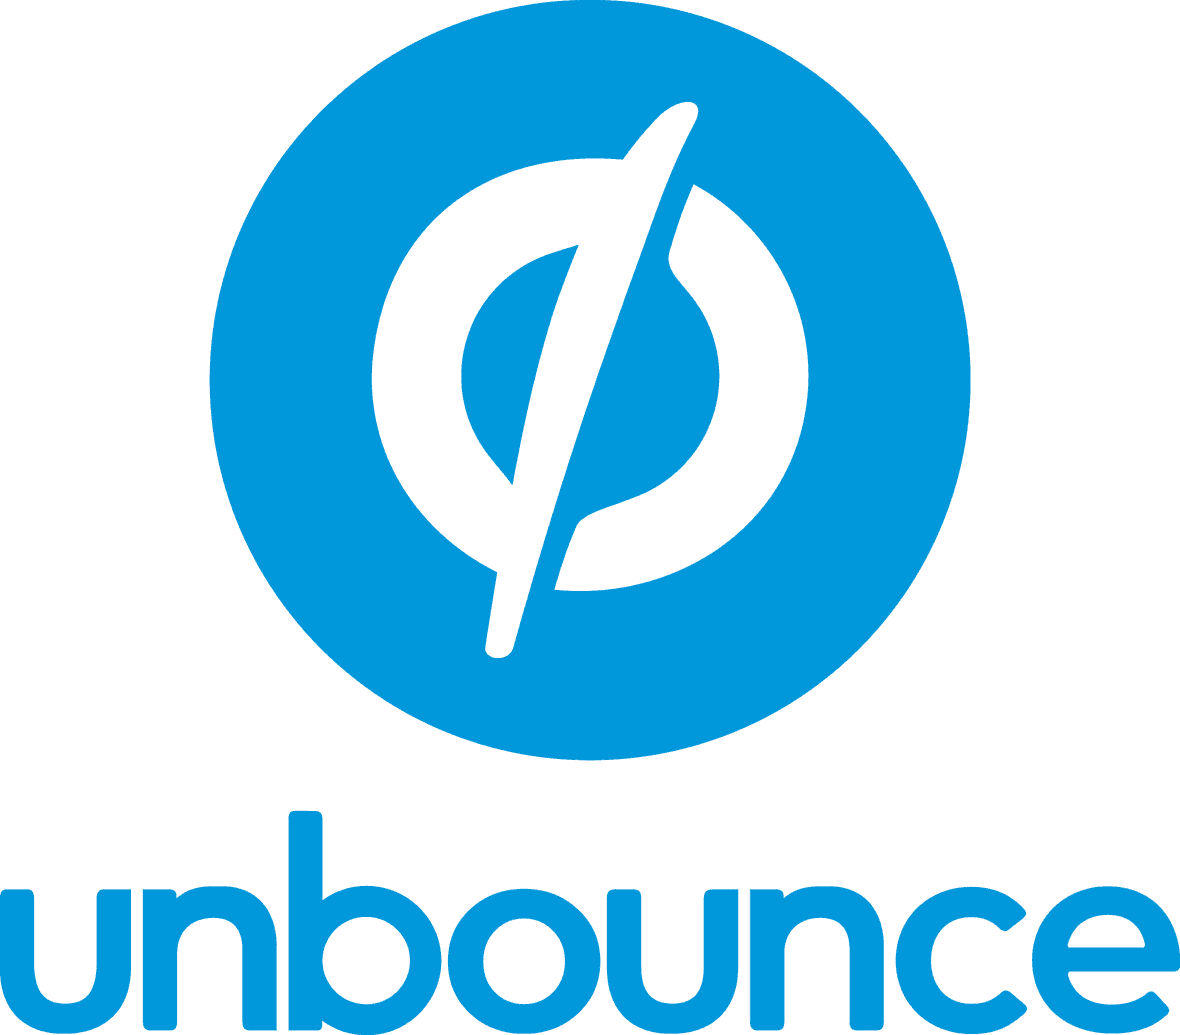 unbounce logo